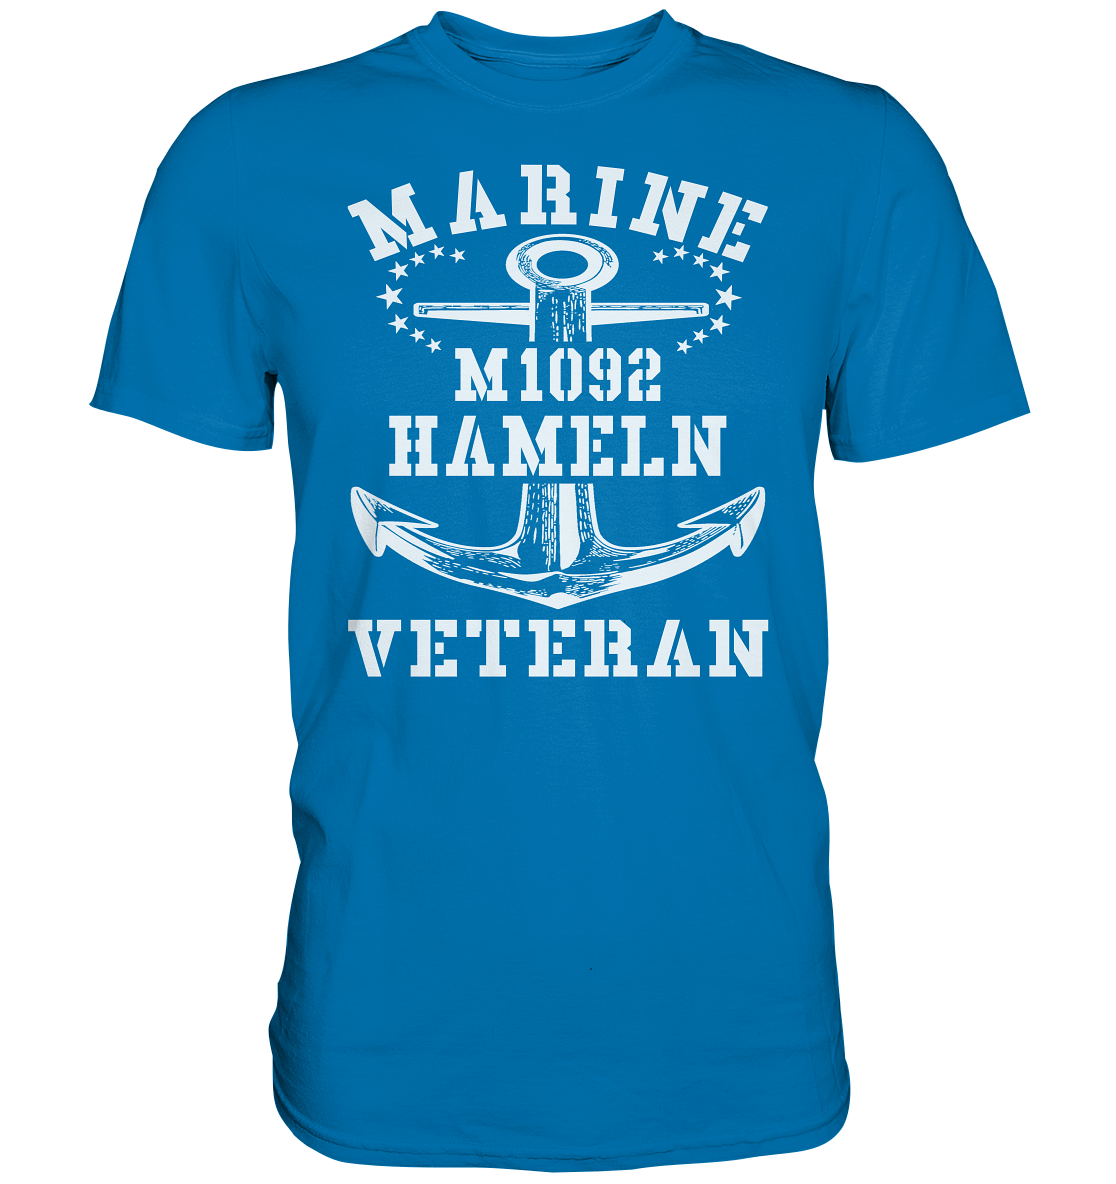 M1092 HAMELN Marine Veteran - Premium Shirt